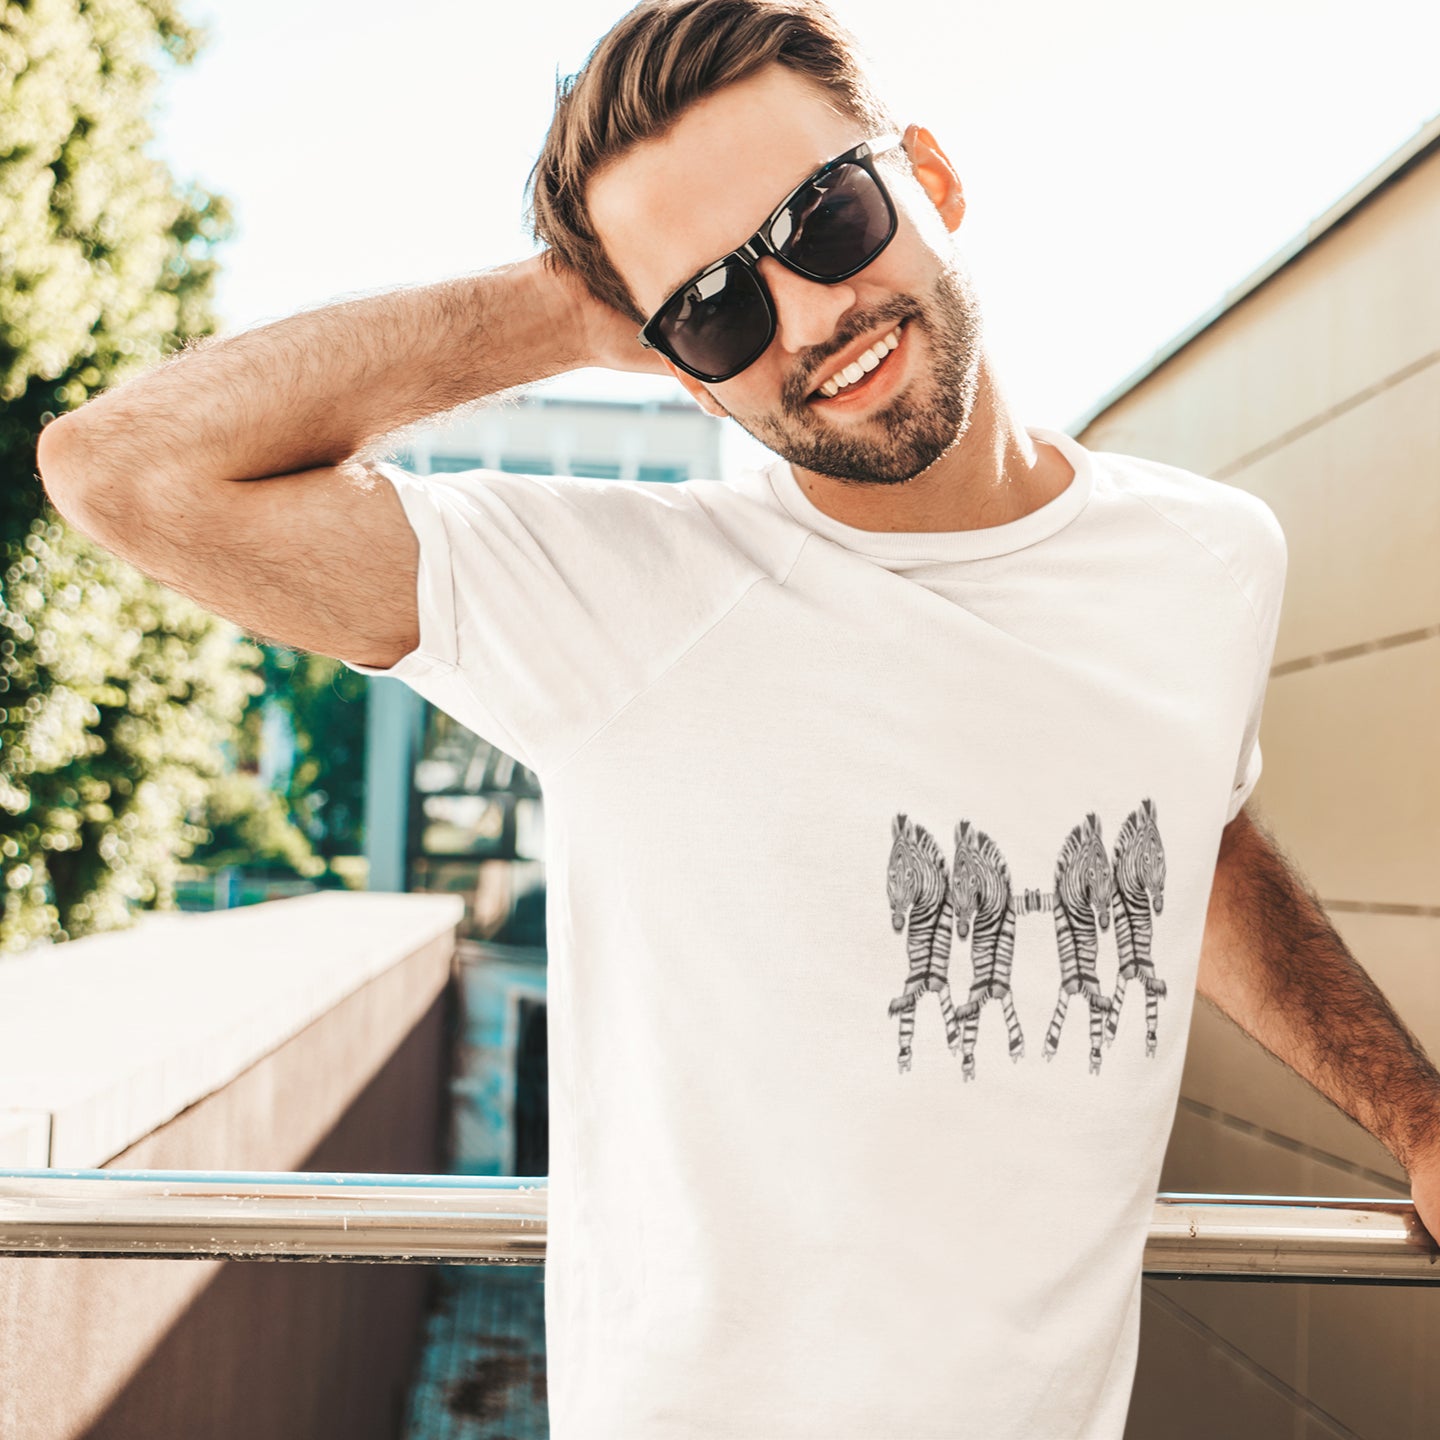 Zebra Roller Skates | 100% Organic Cotton T Shirt worn by a man